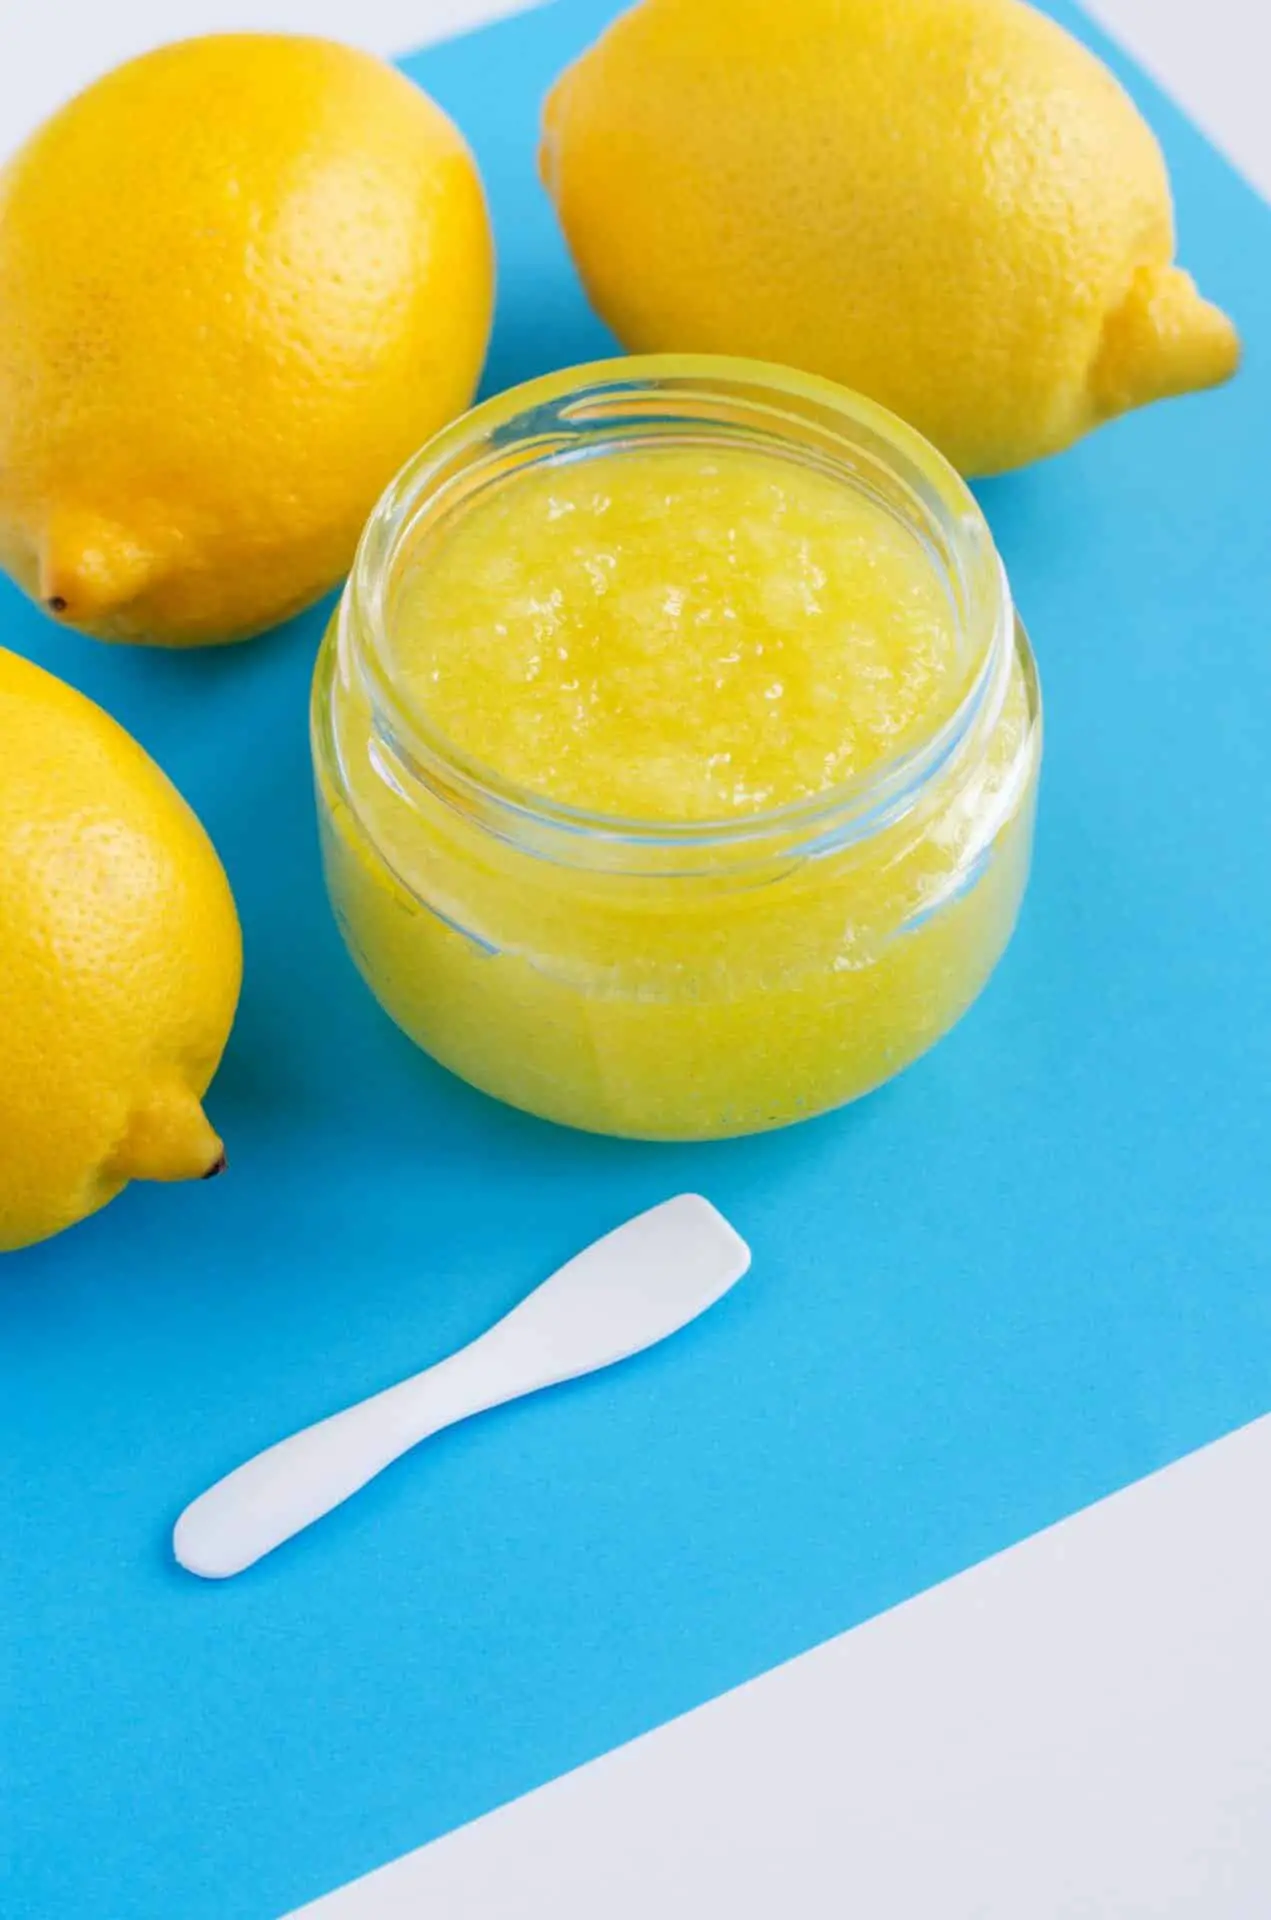 The disadvantages of lemon juice on hair